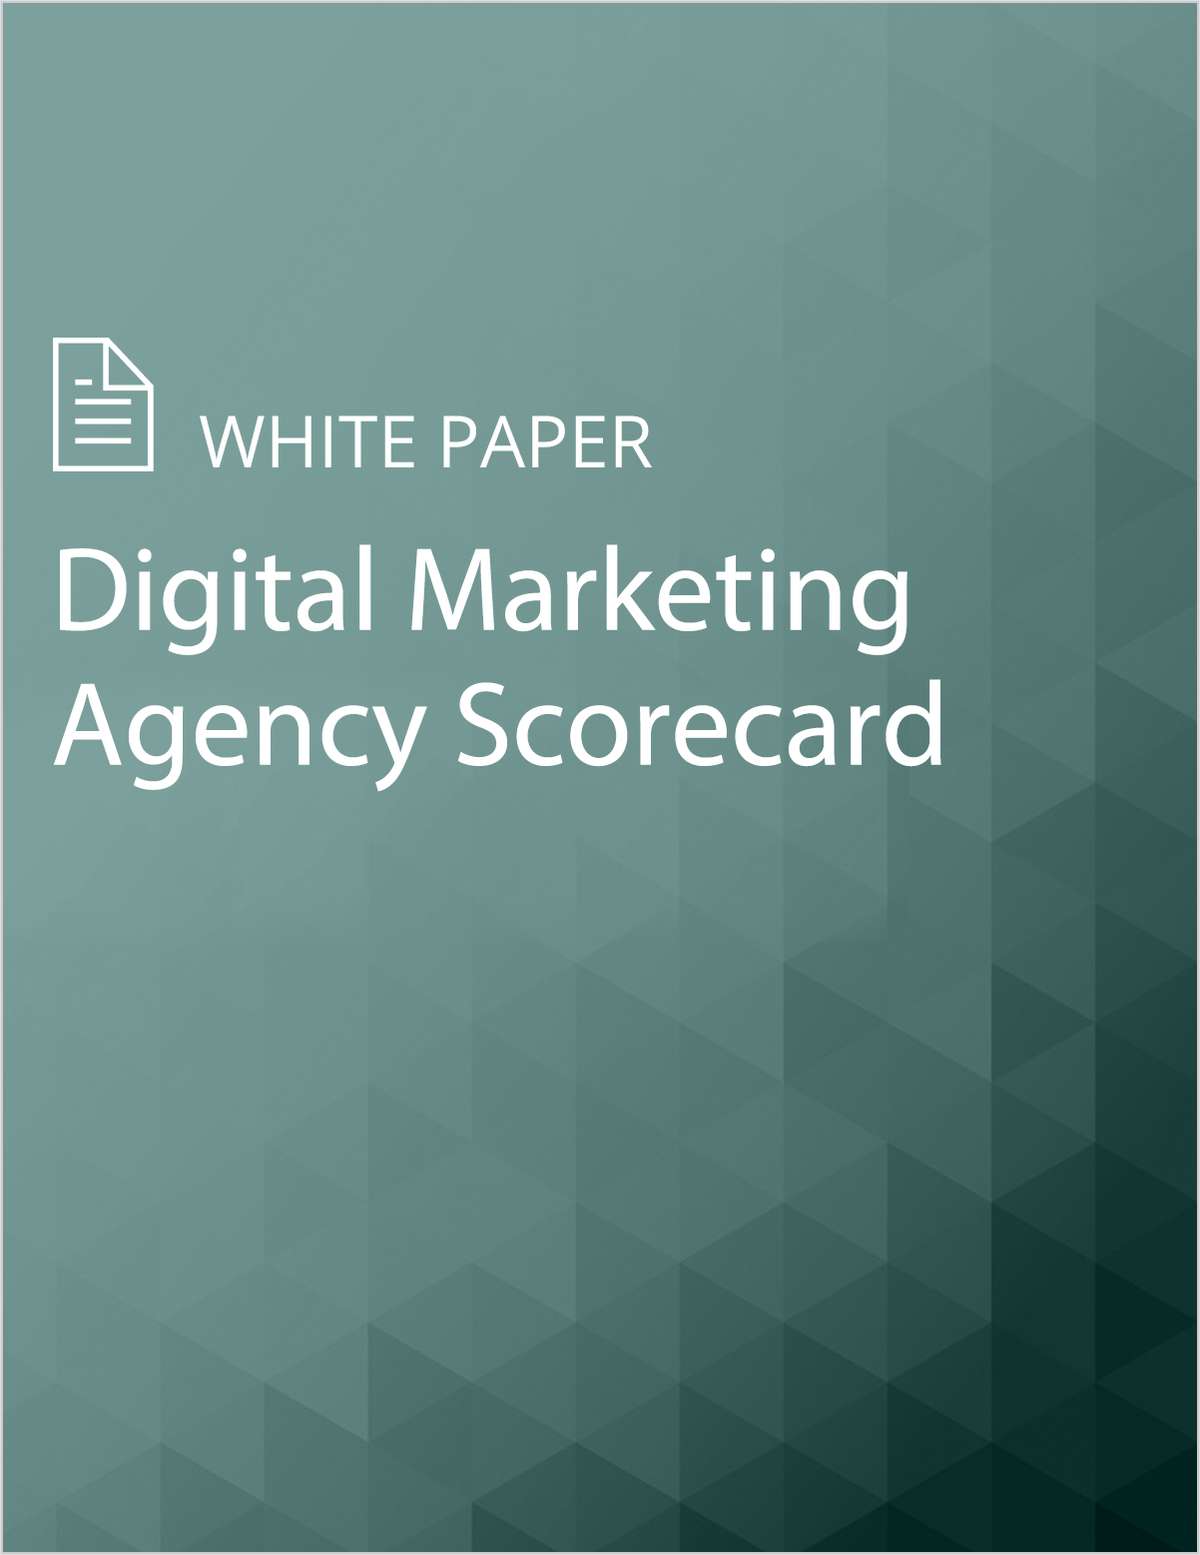 Digital Marketing Agency Scorecard